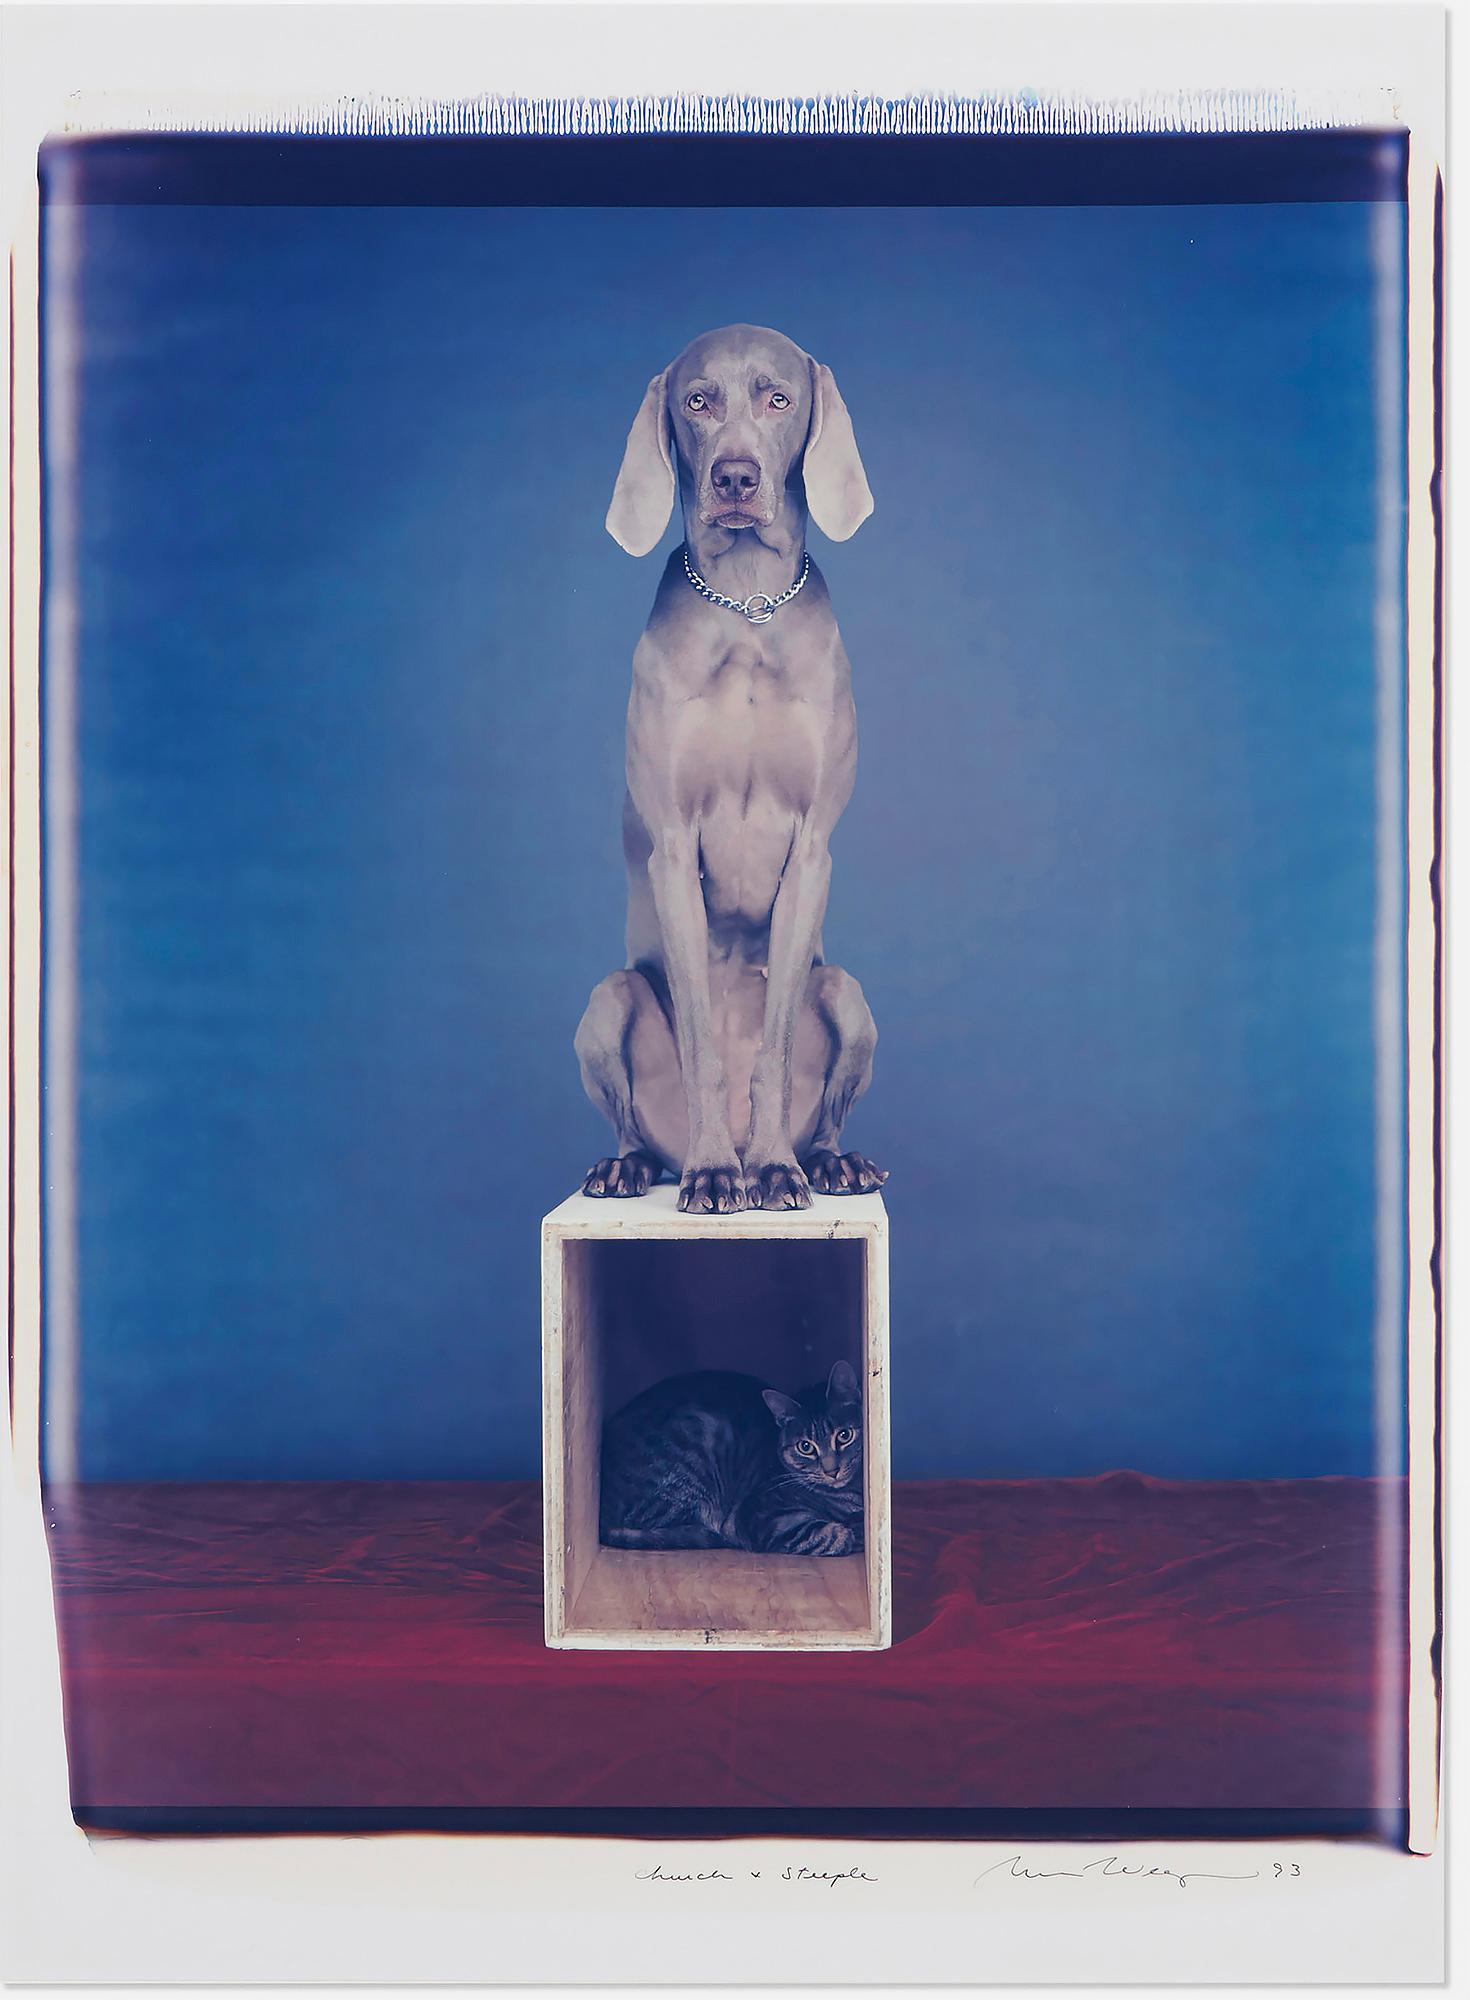 William Wegman Portrait Photograph - Church & Steeple - Dog and Cat Large Format Polaroid